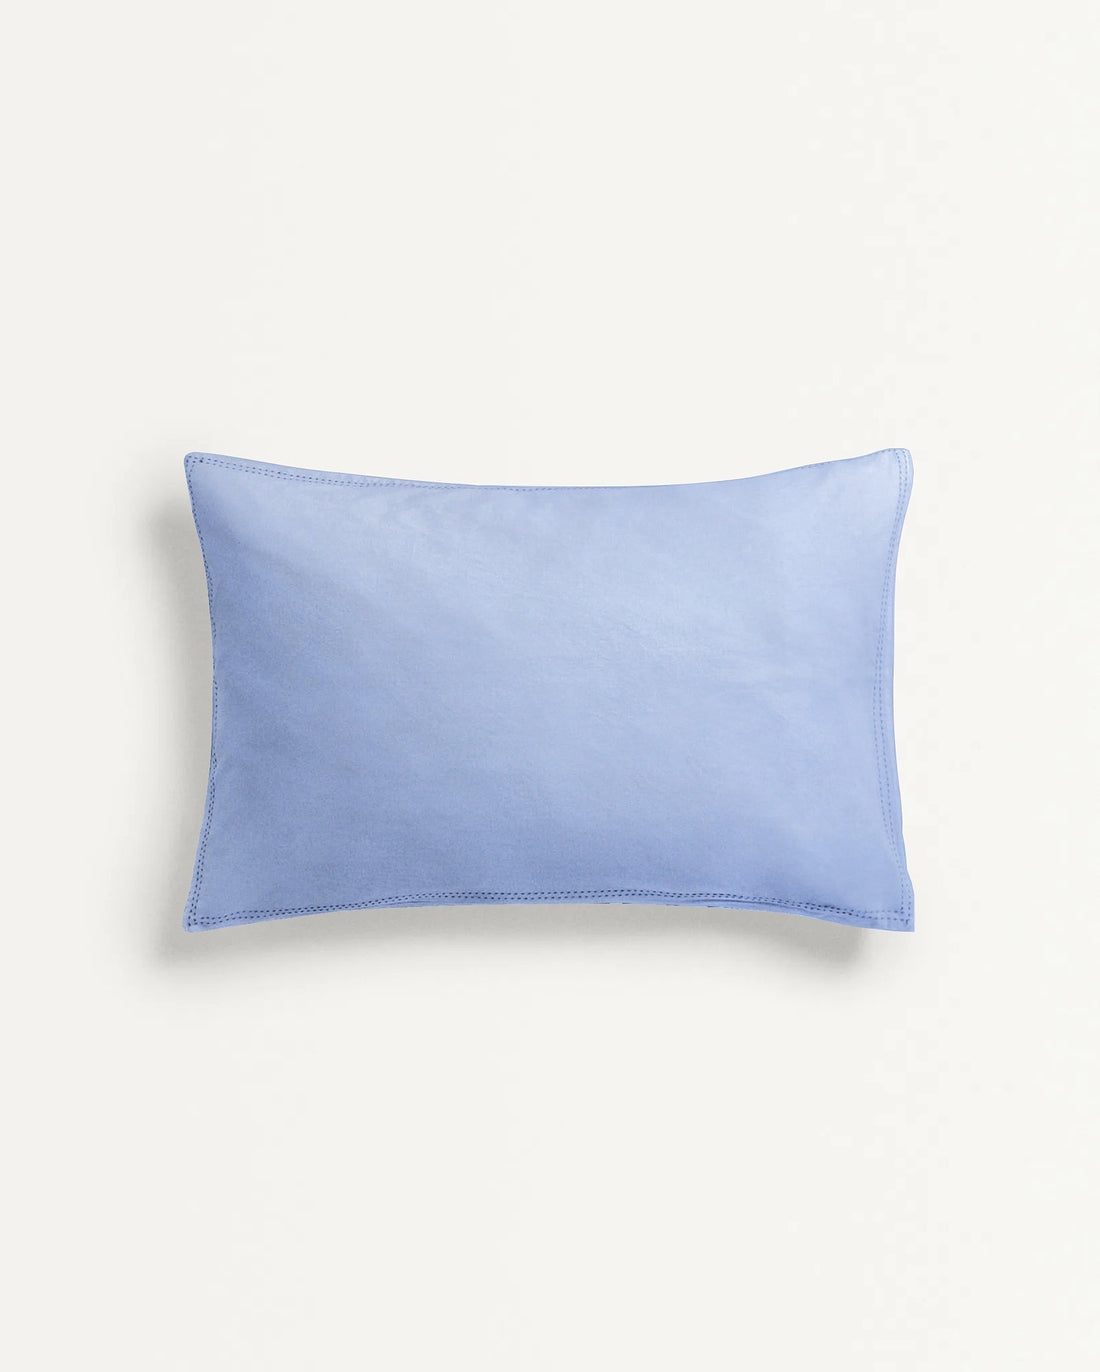 ‘Light Blue’ Organic Baby Pillow Cover